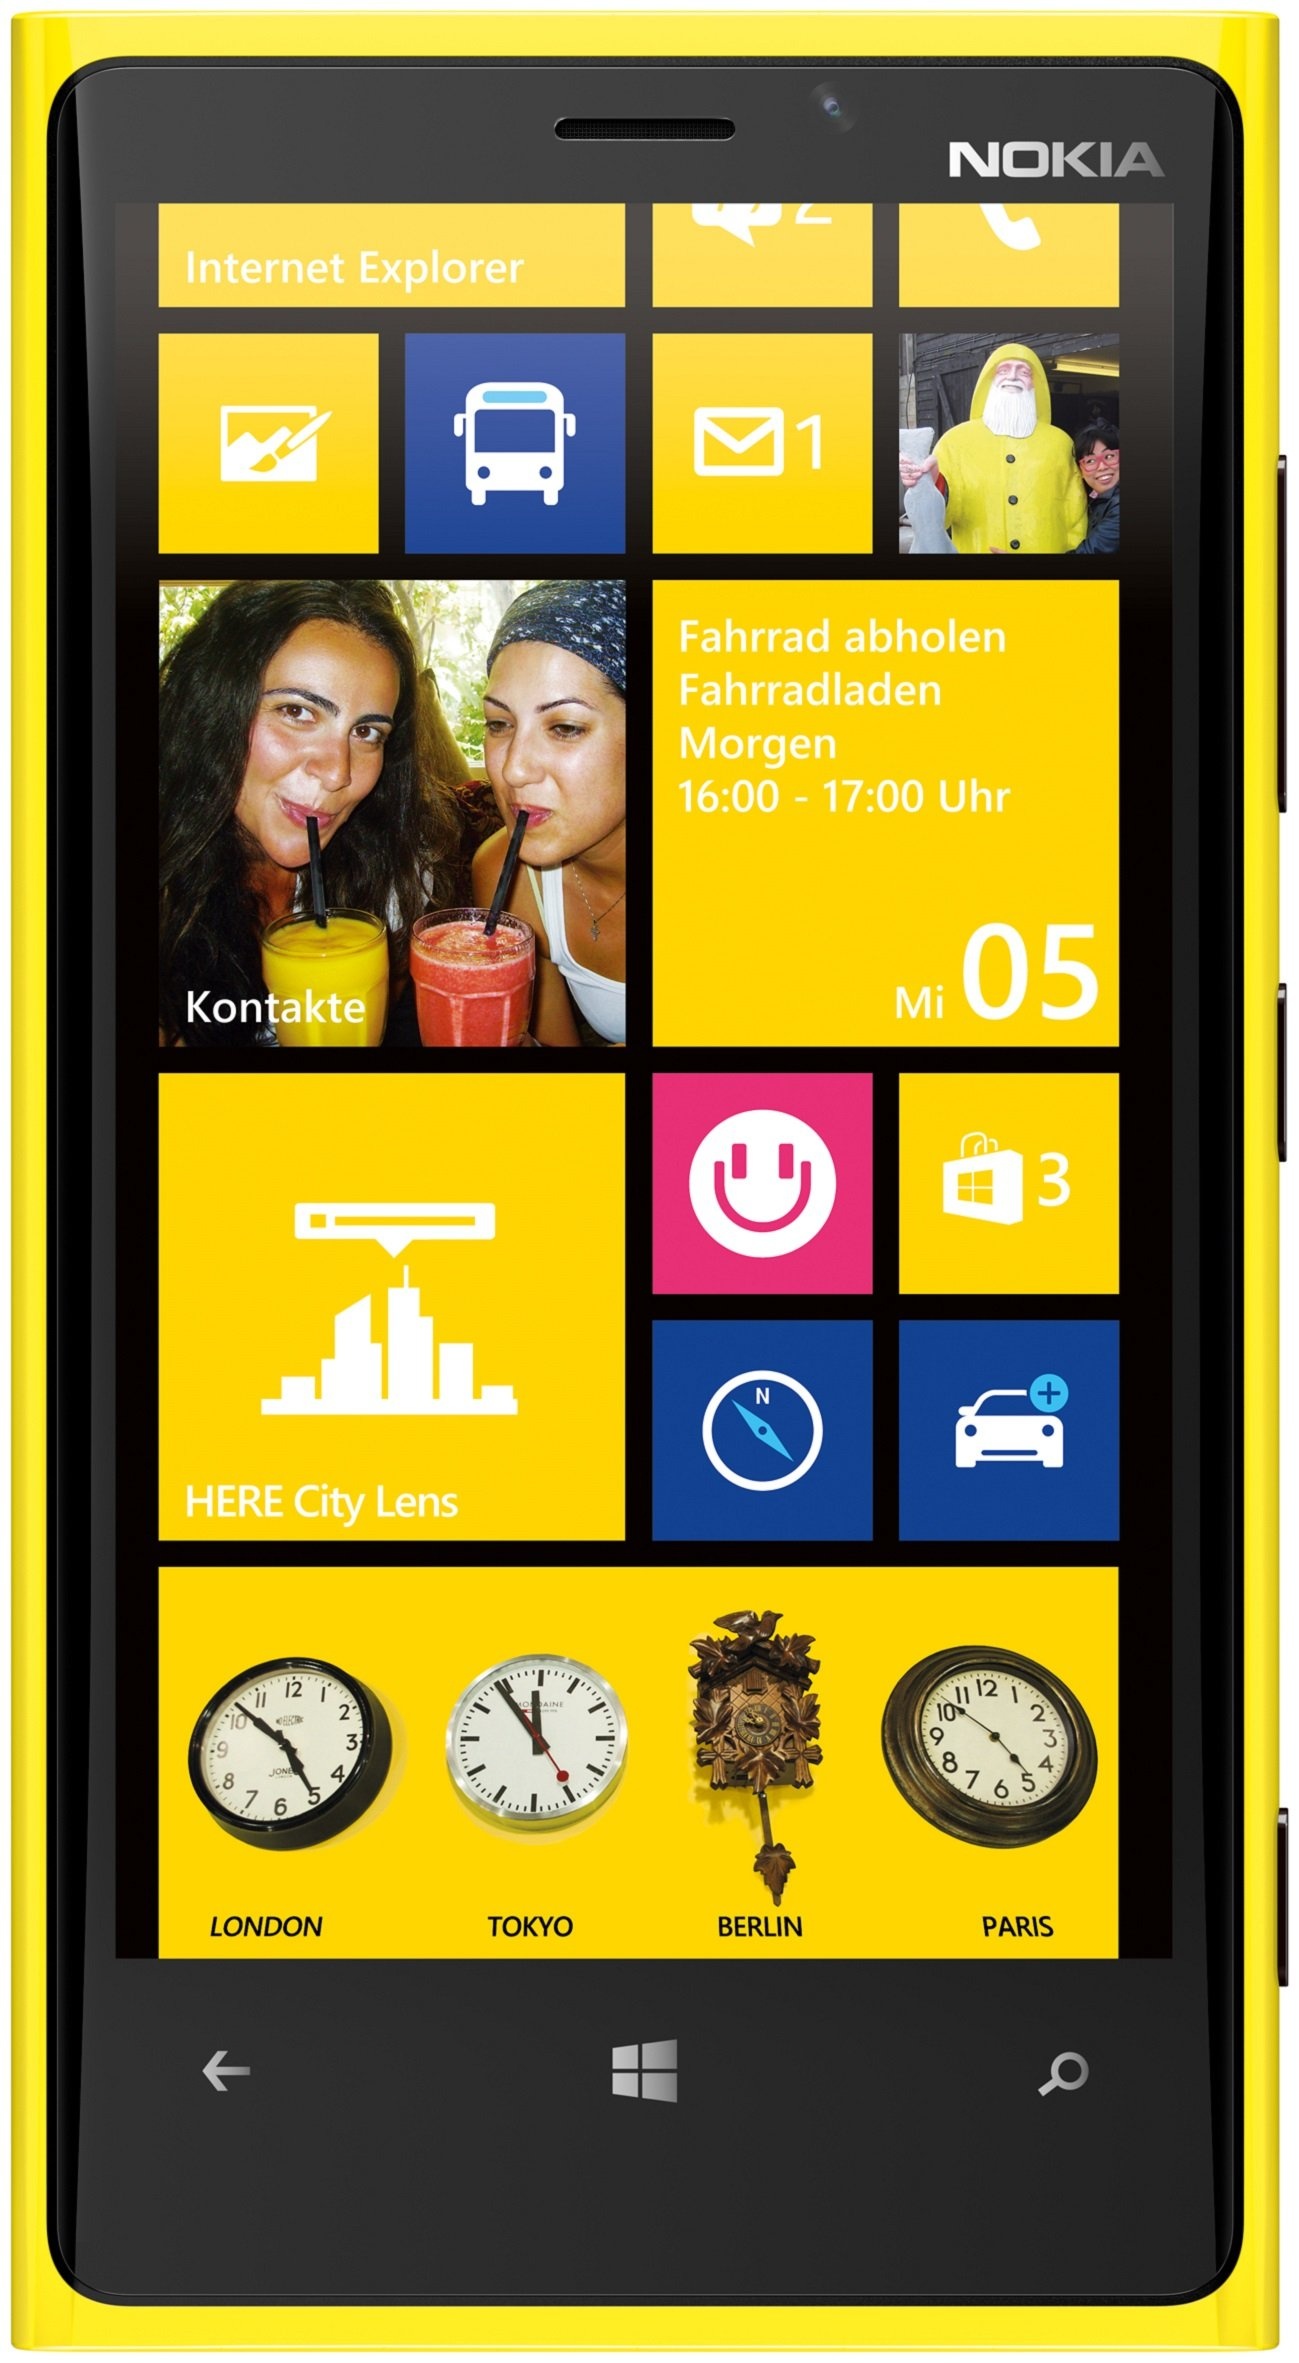 Nokia Lumia 920 Smartphone (11,4 cm (4,5 Zoll) WXGA HD IPS LCD Touchscreen, 8 Megapixel Kamera, 1,5 GHz Dual-Core-Prozessor, NFC, LTE-fähig, Windows Phone 8) gloss yellow